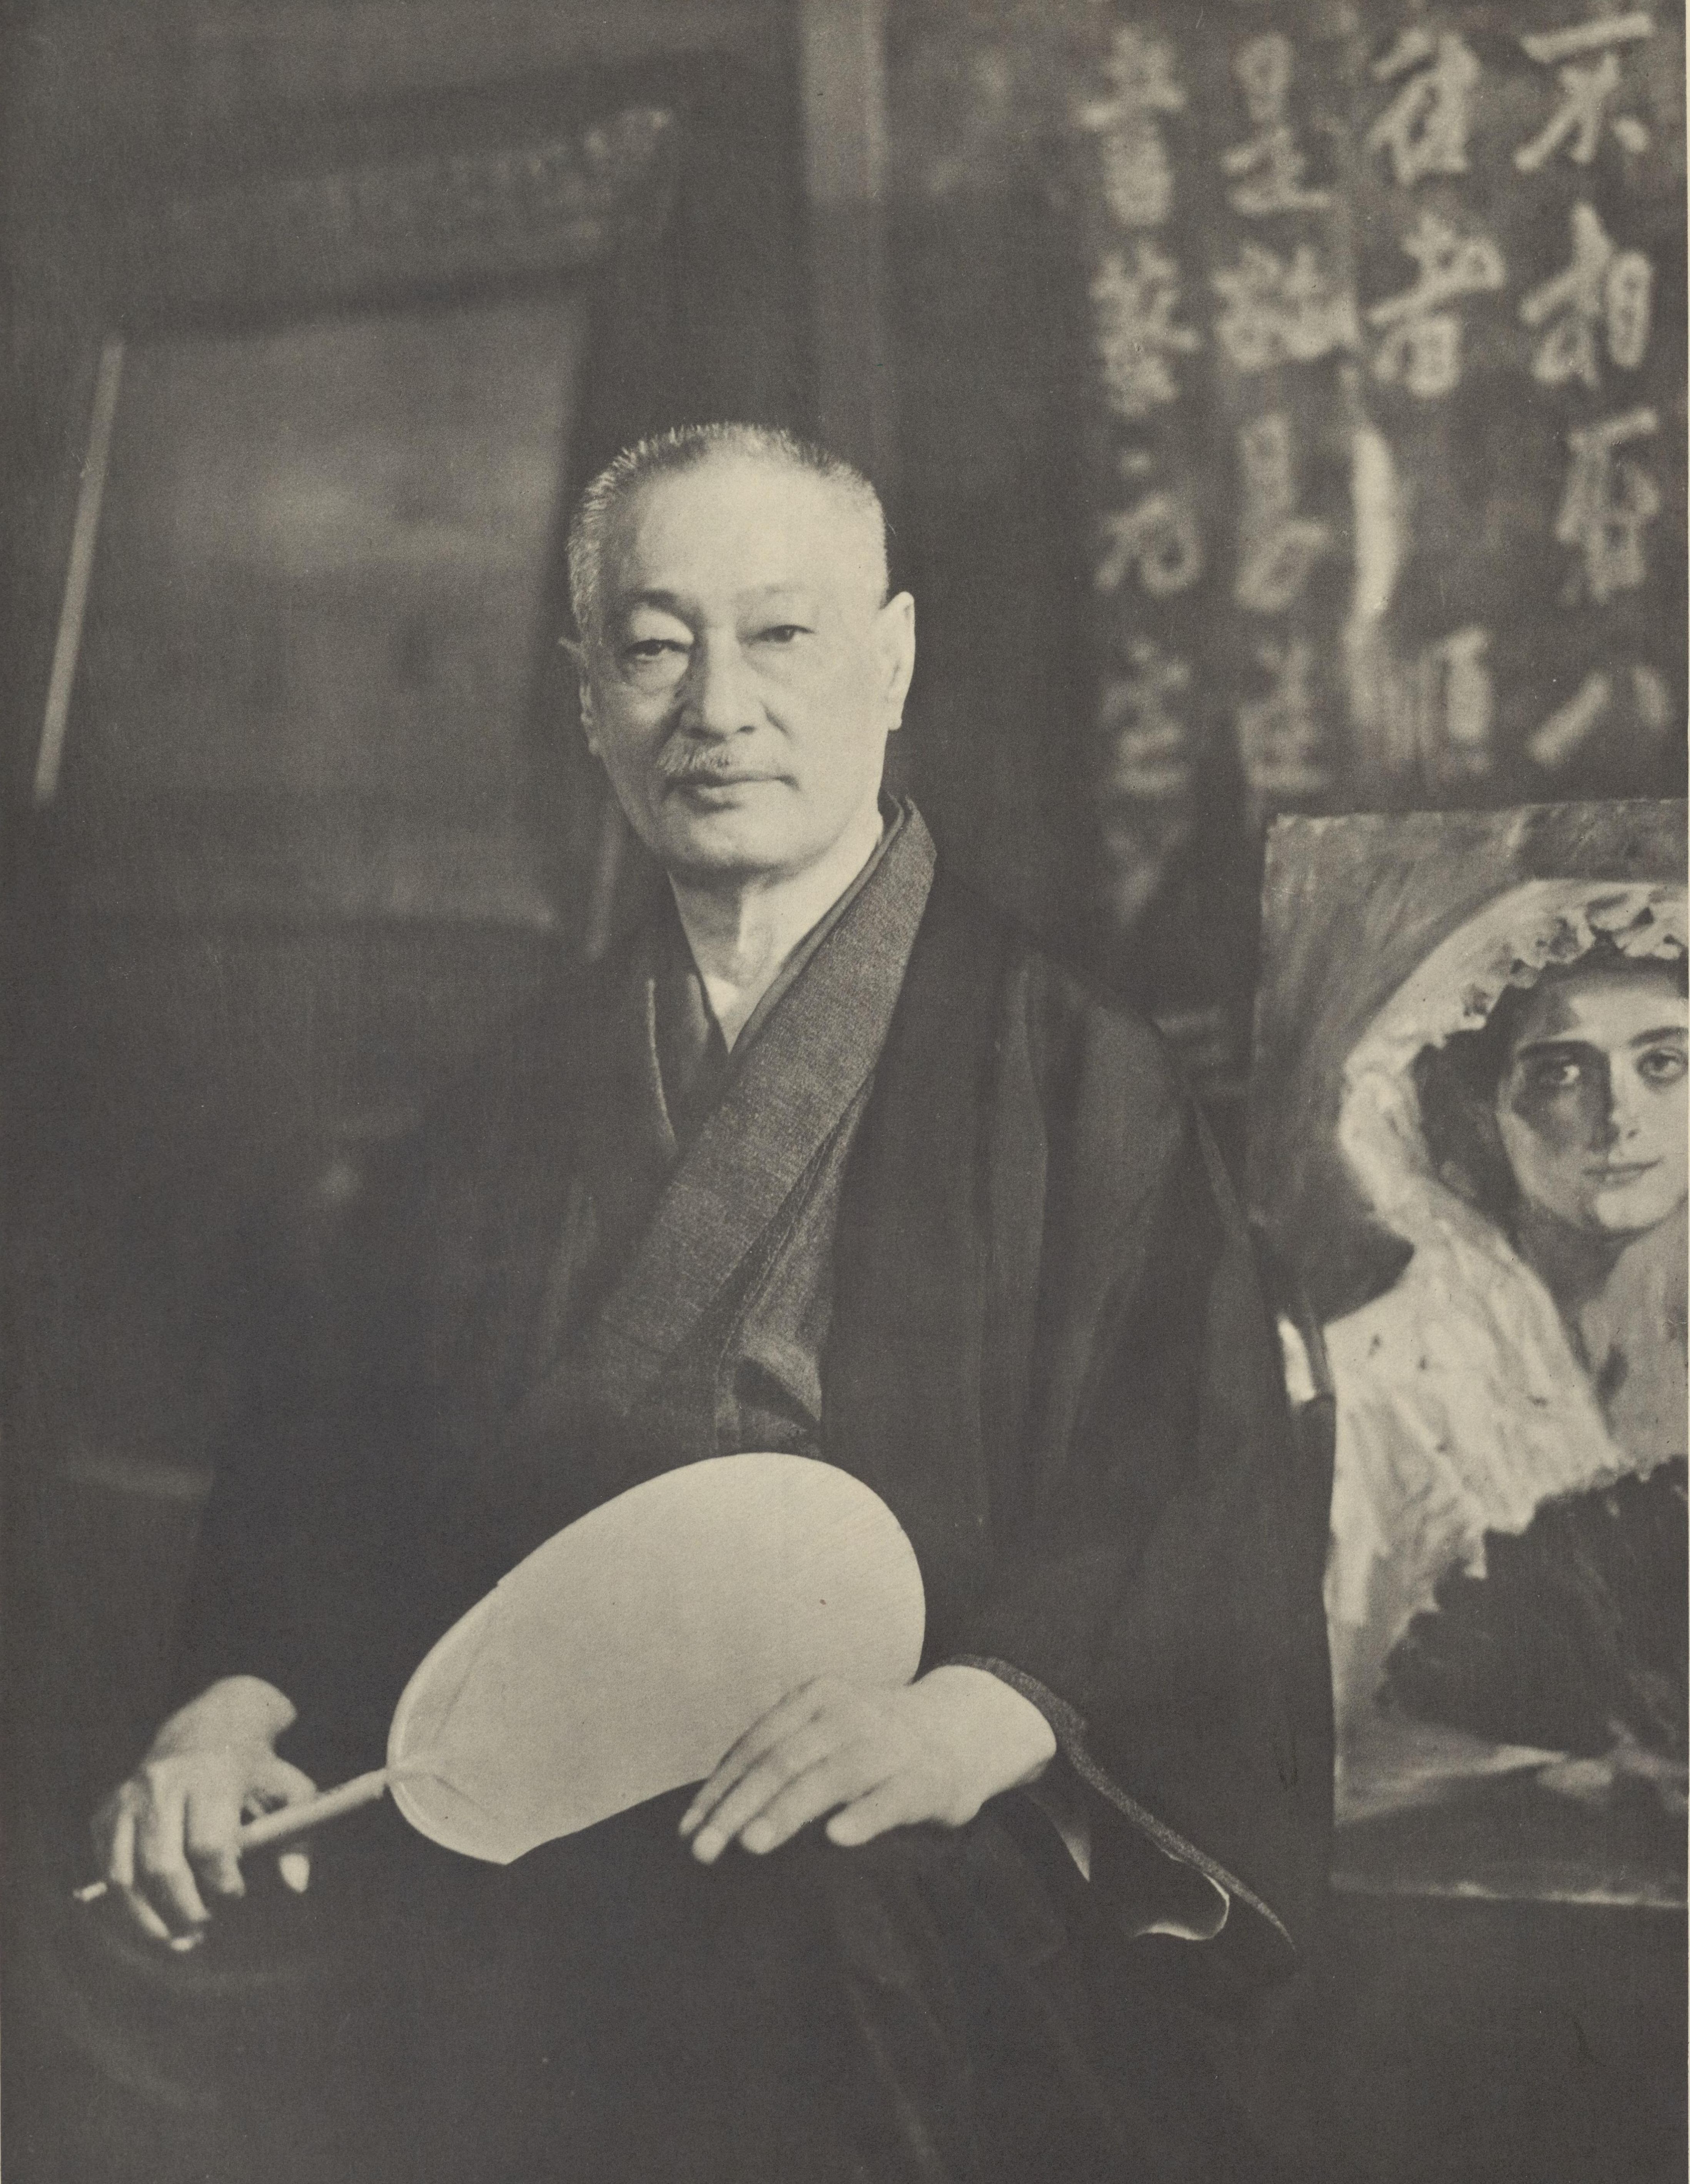 Portrait of FUJISHIMA Takeji1